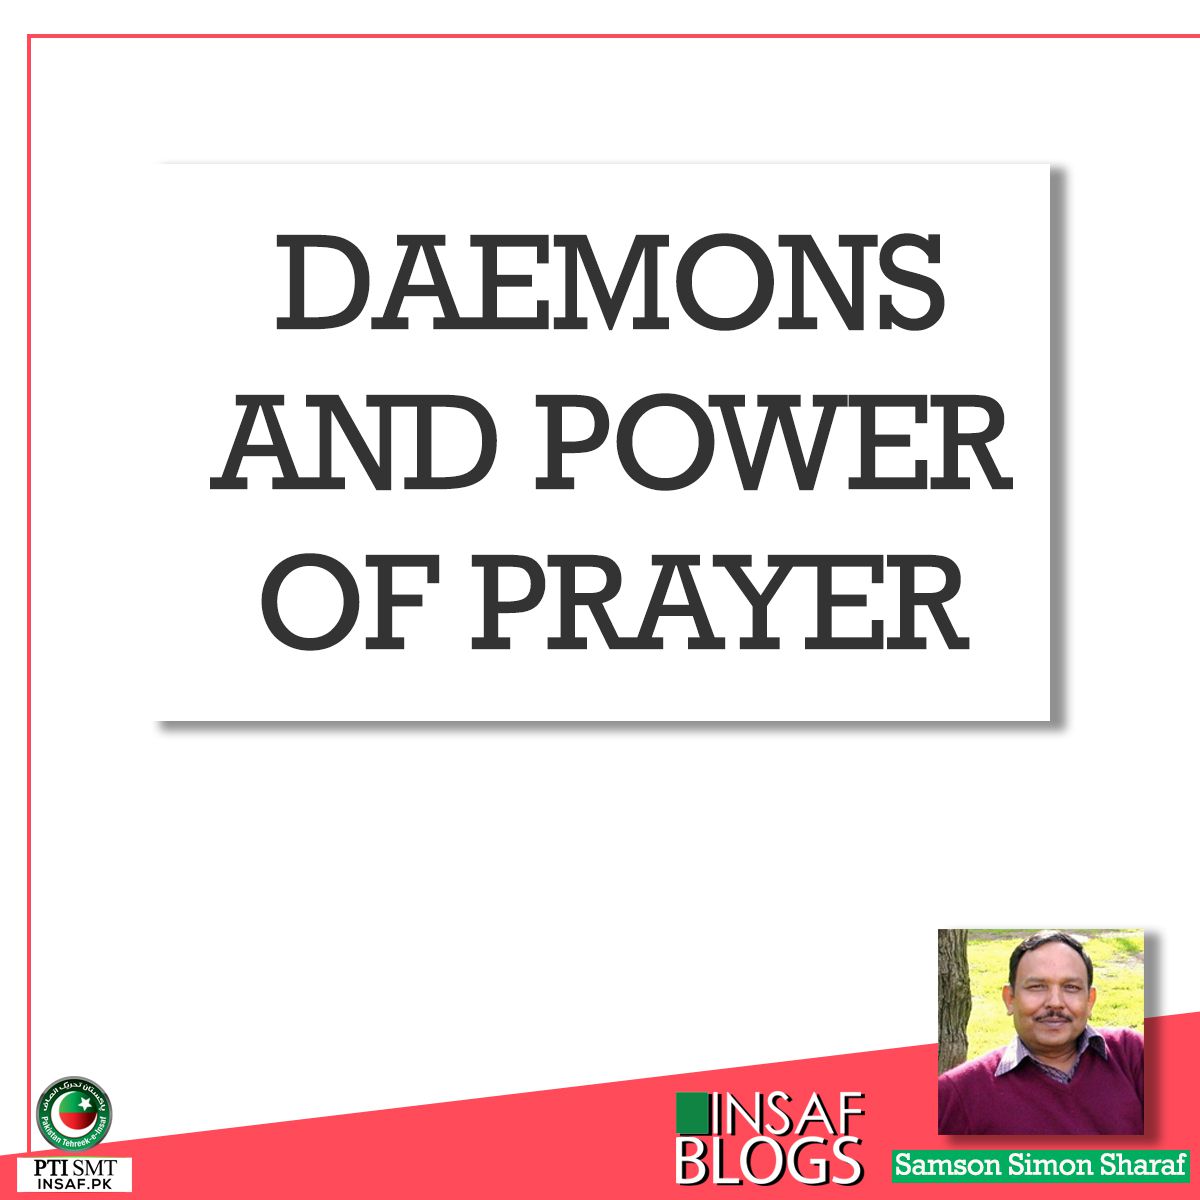 demons-power-prayer-insaf-blog-2018.jpg